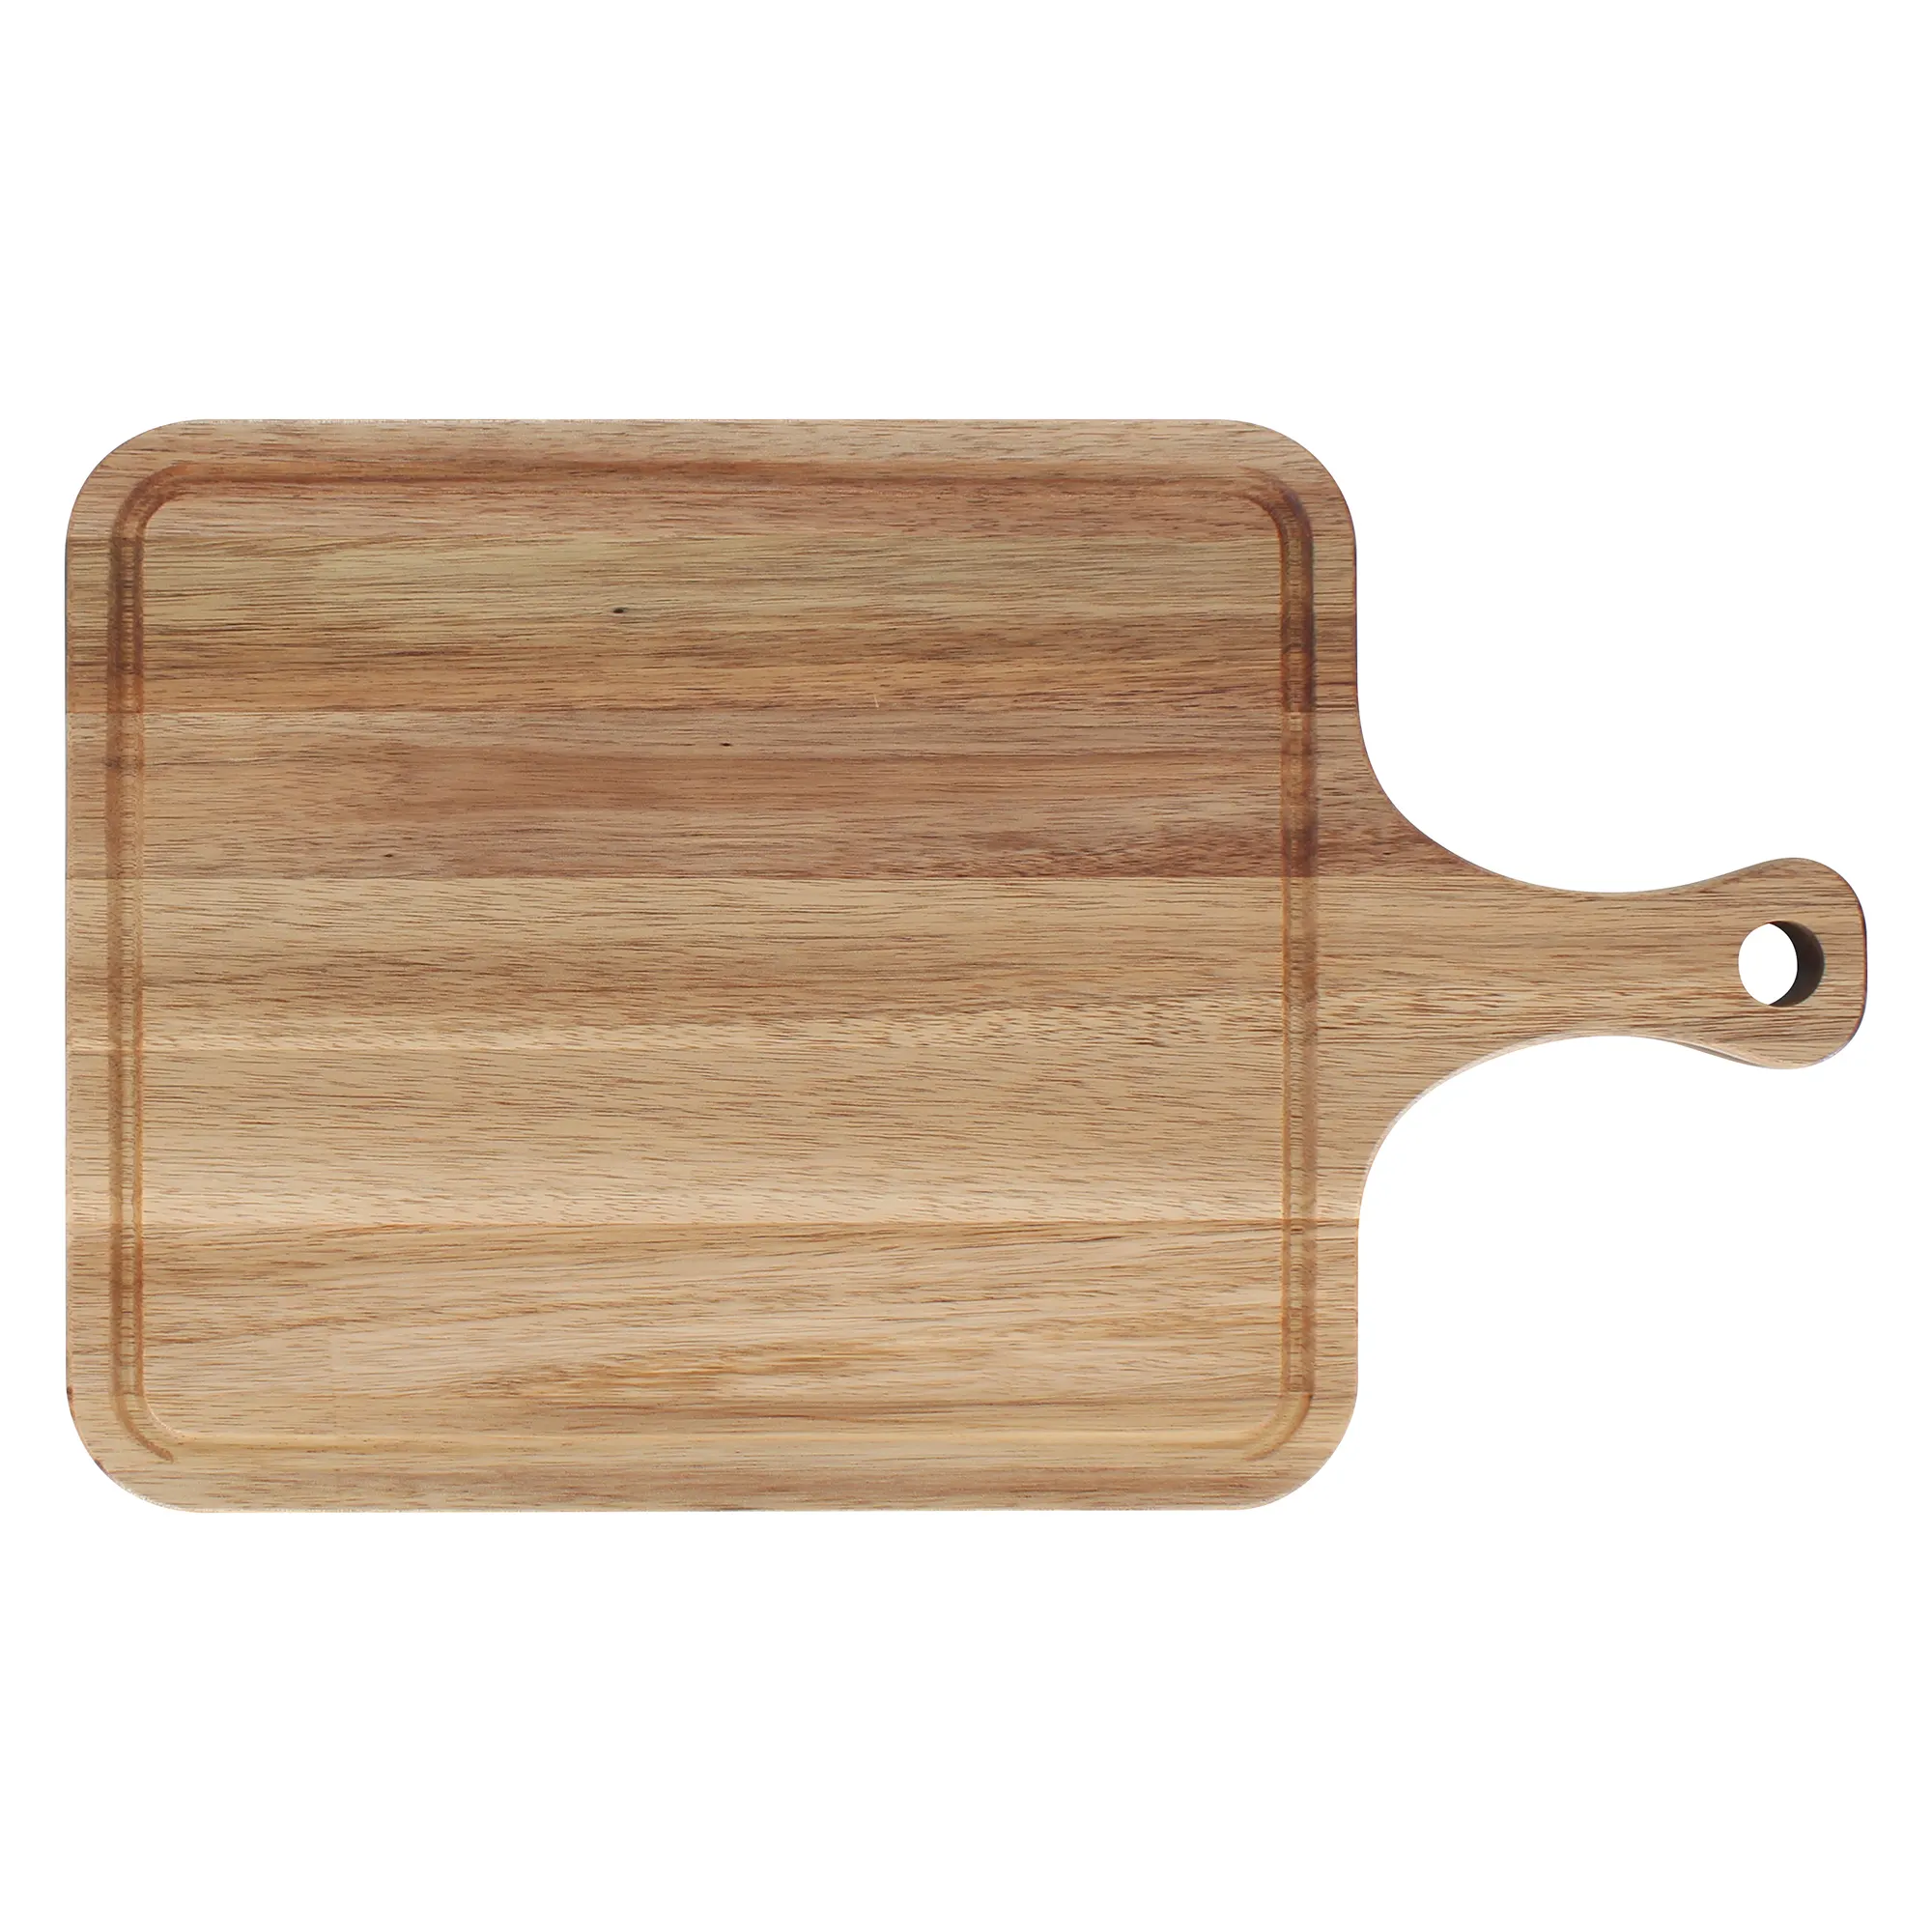 Wooden cutting board Paddle Cutting Board brand WoodnWood